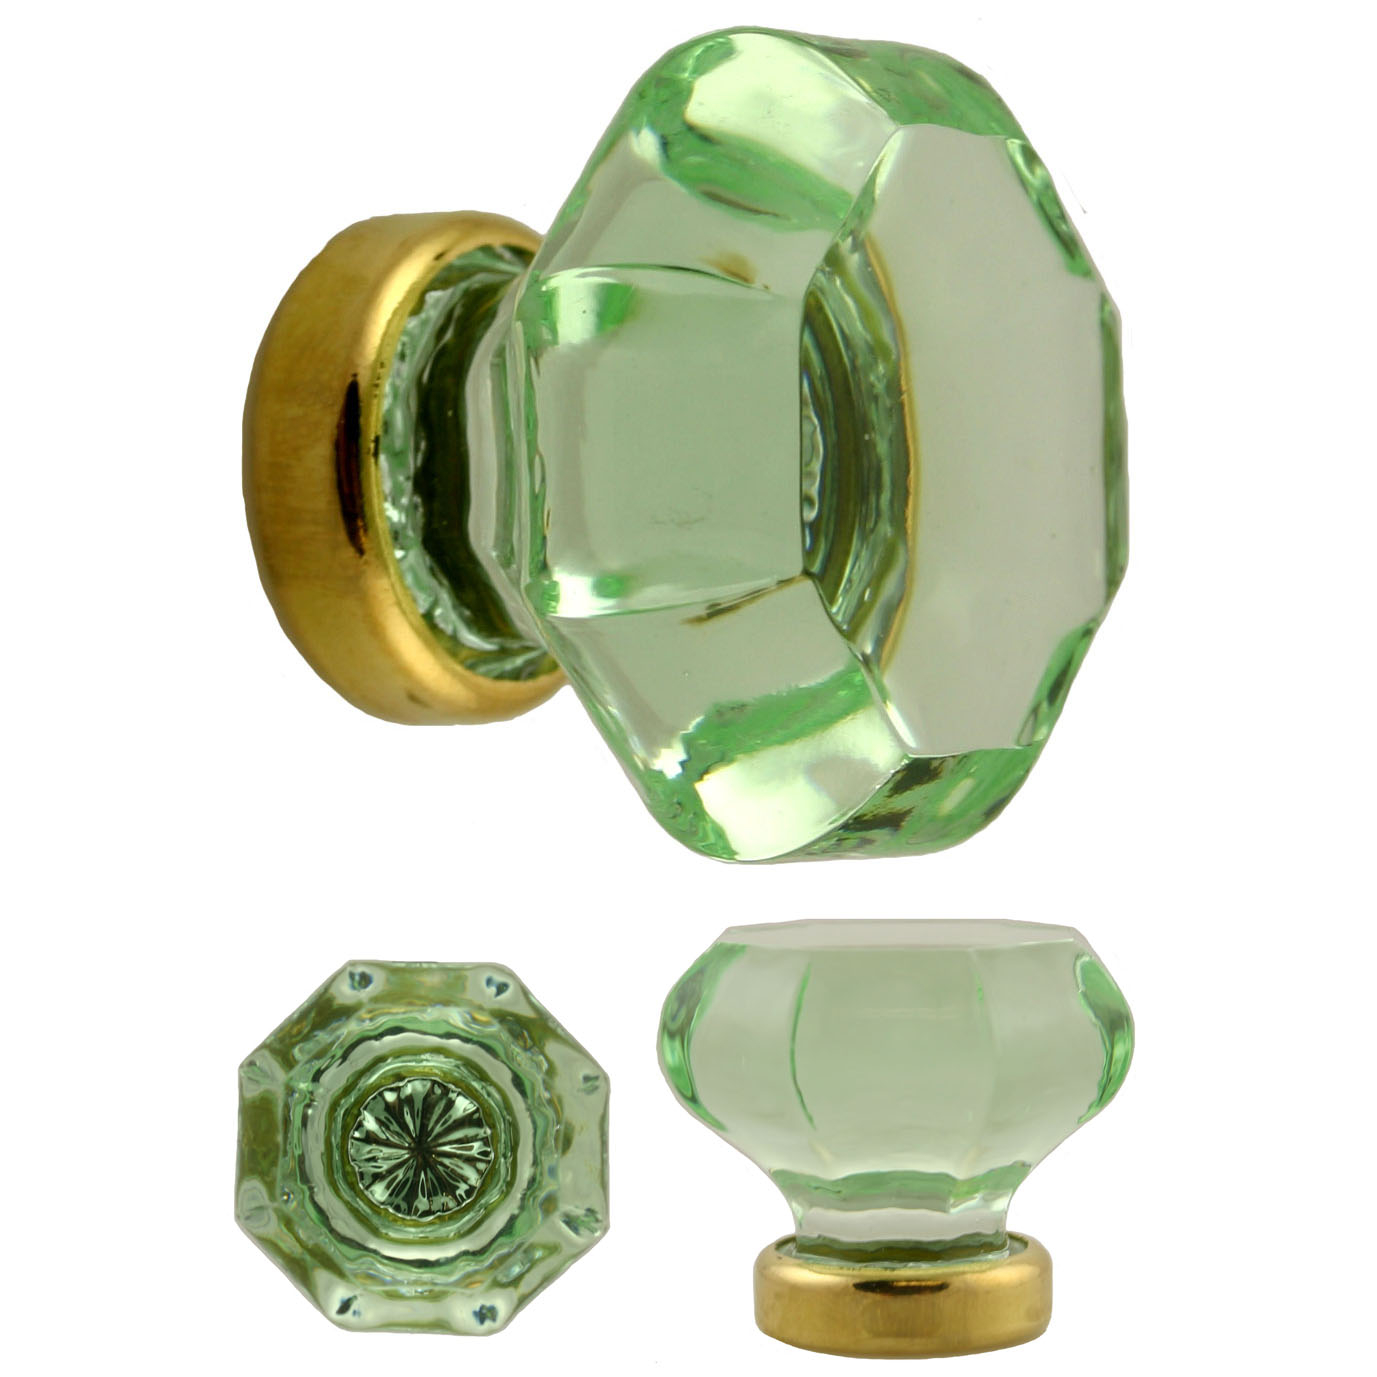 Emerald green green depression glass